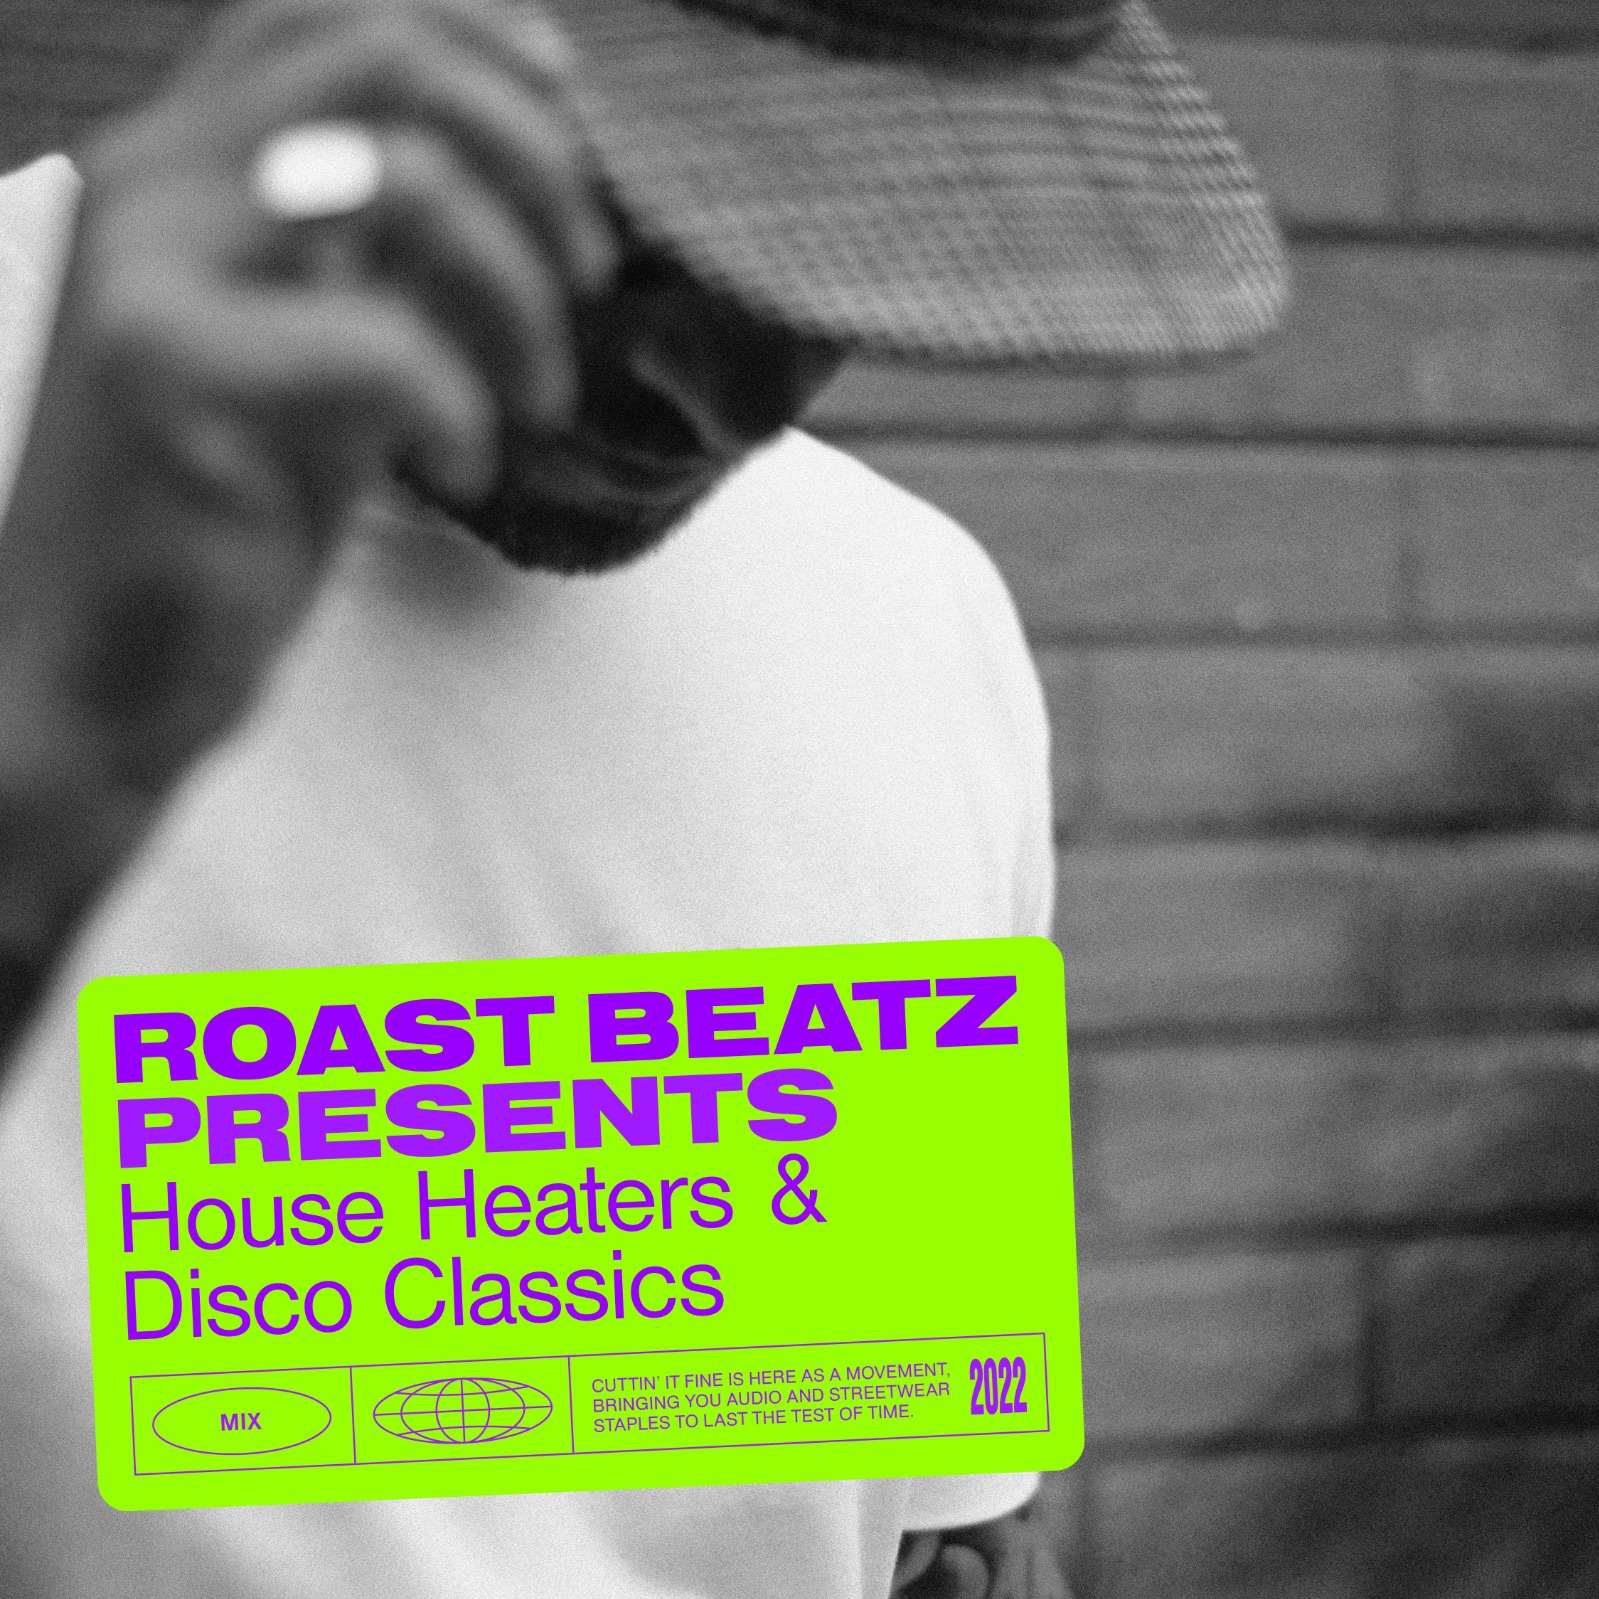 डाउनलोड करा Roast Beatz Presents House Heaters And Disco Classics